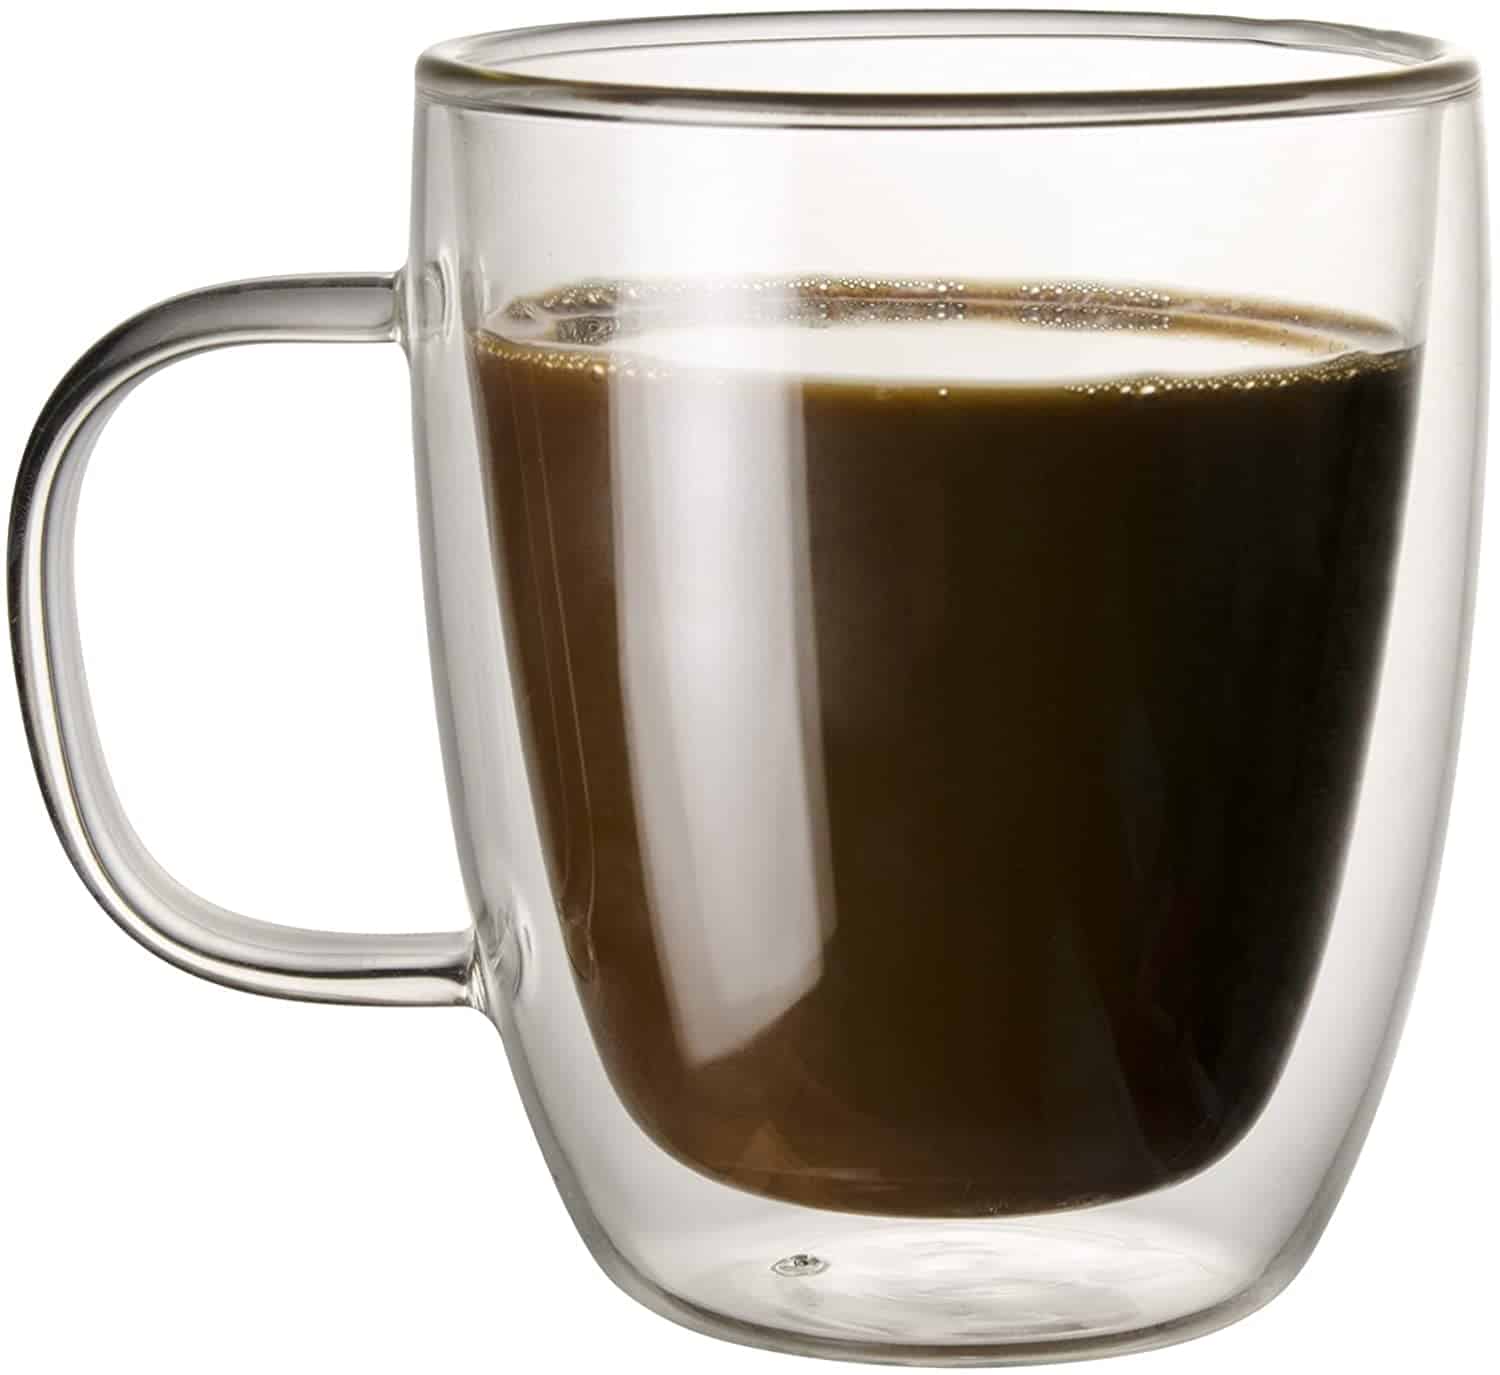 https://slyprc.com/wp-content/uploads/2022/05/wholesale-glass-coffee-mugs-2-1.jpg